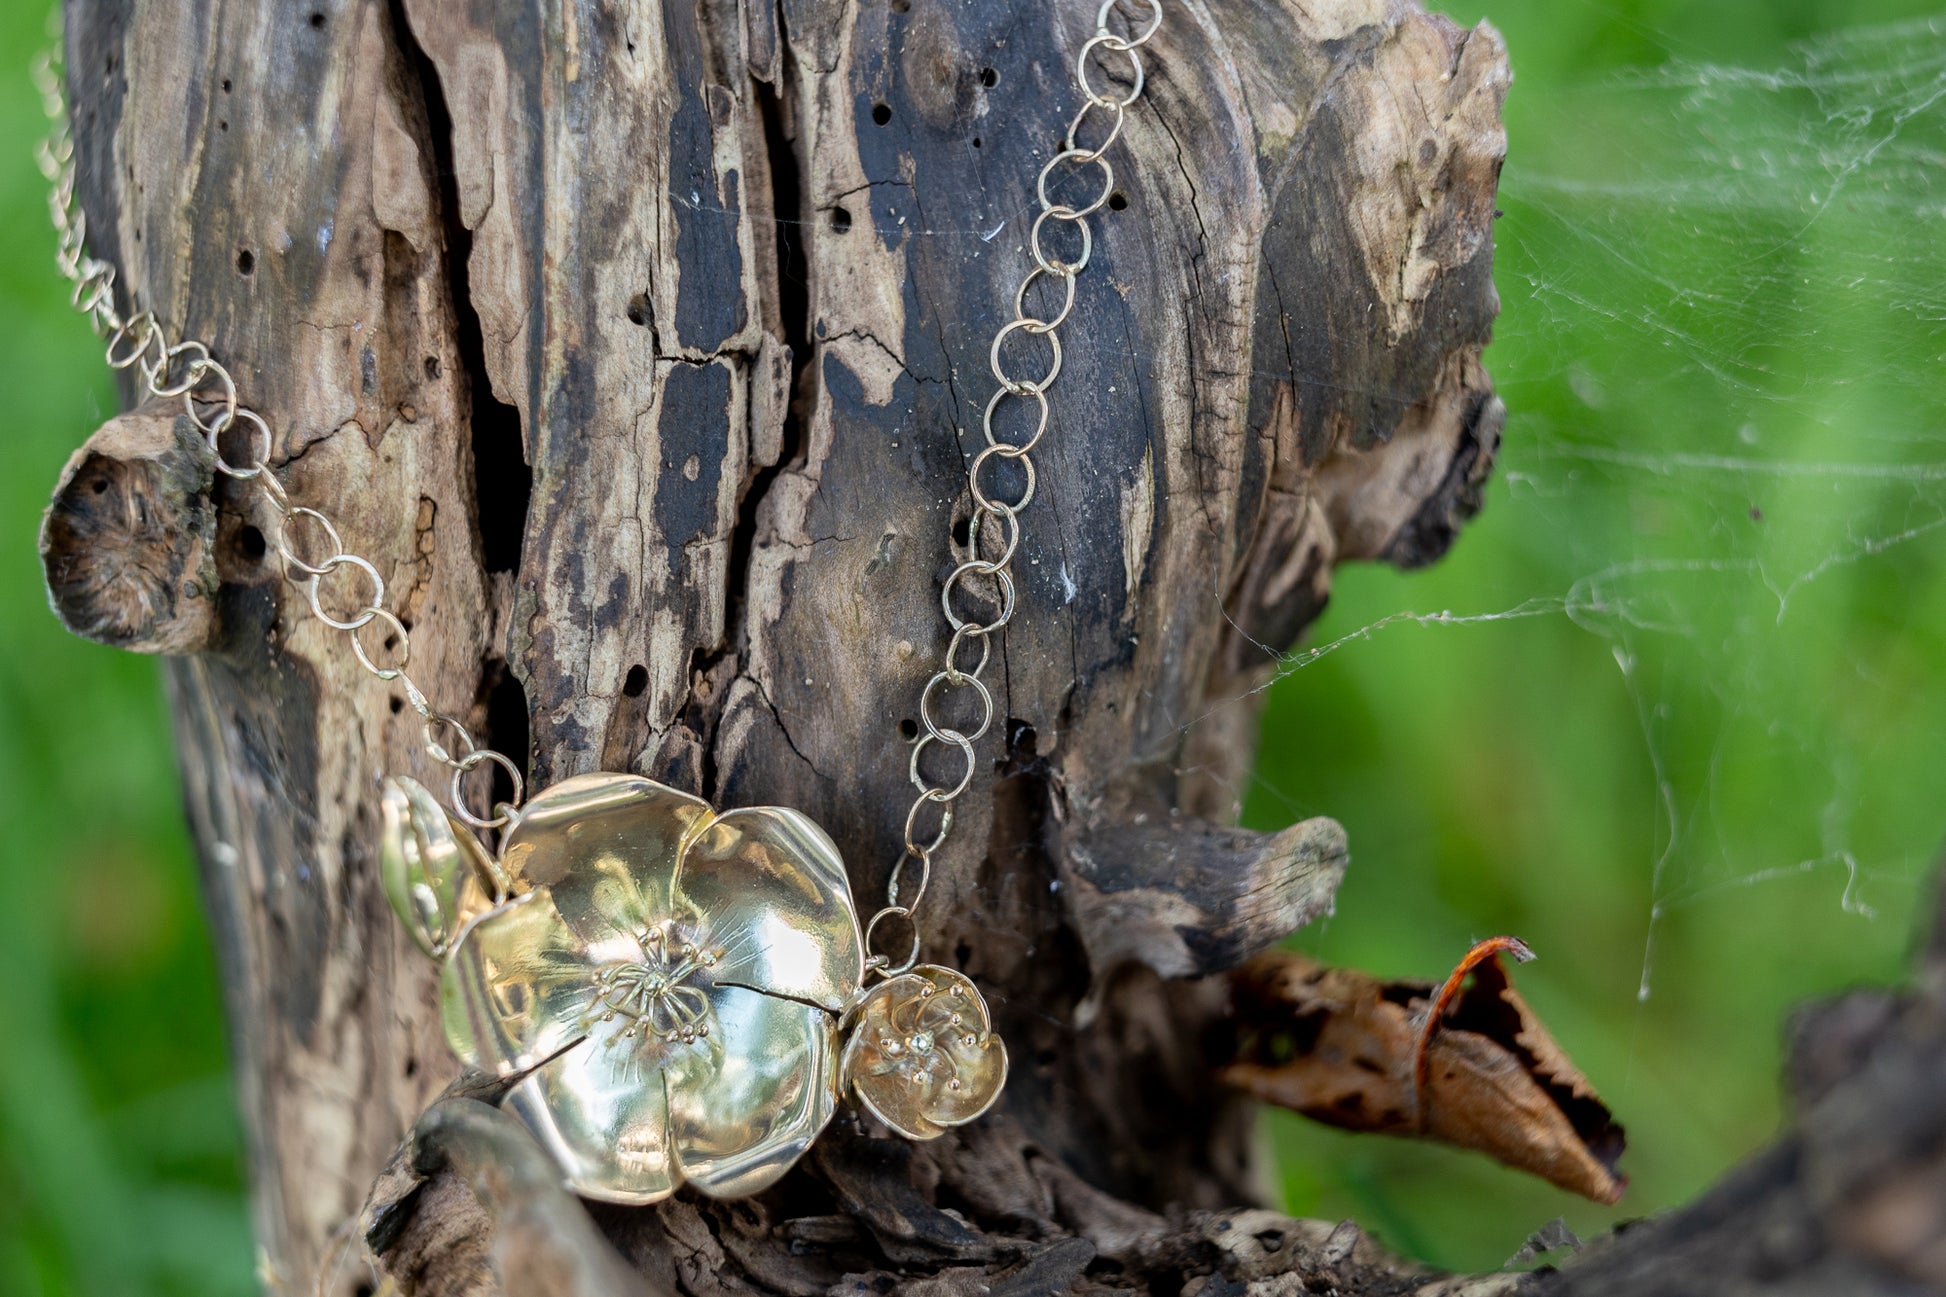 botanical Lifesize gold wild rose pendant necklace and large link gold chain hanging on tree bark